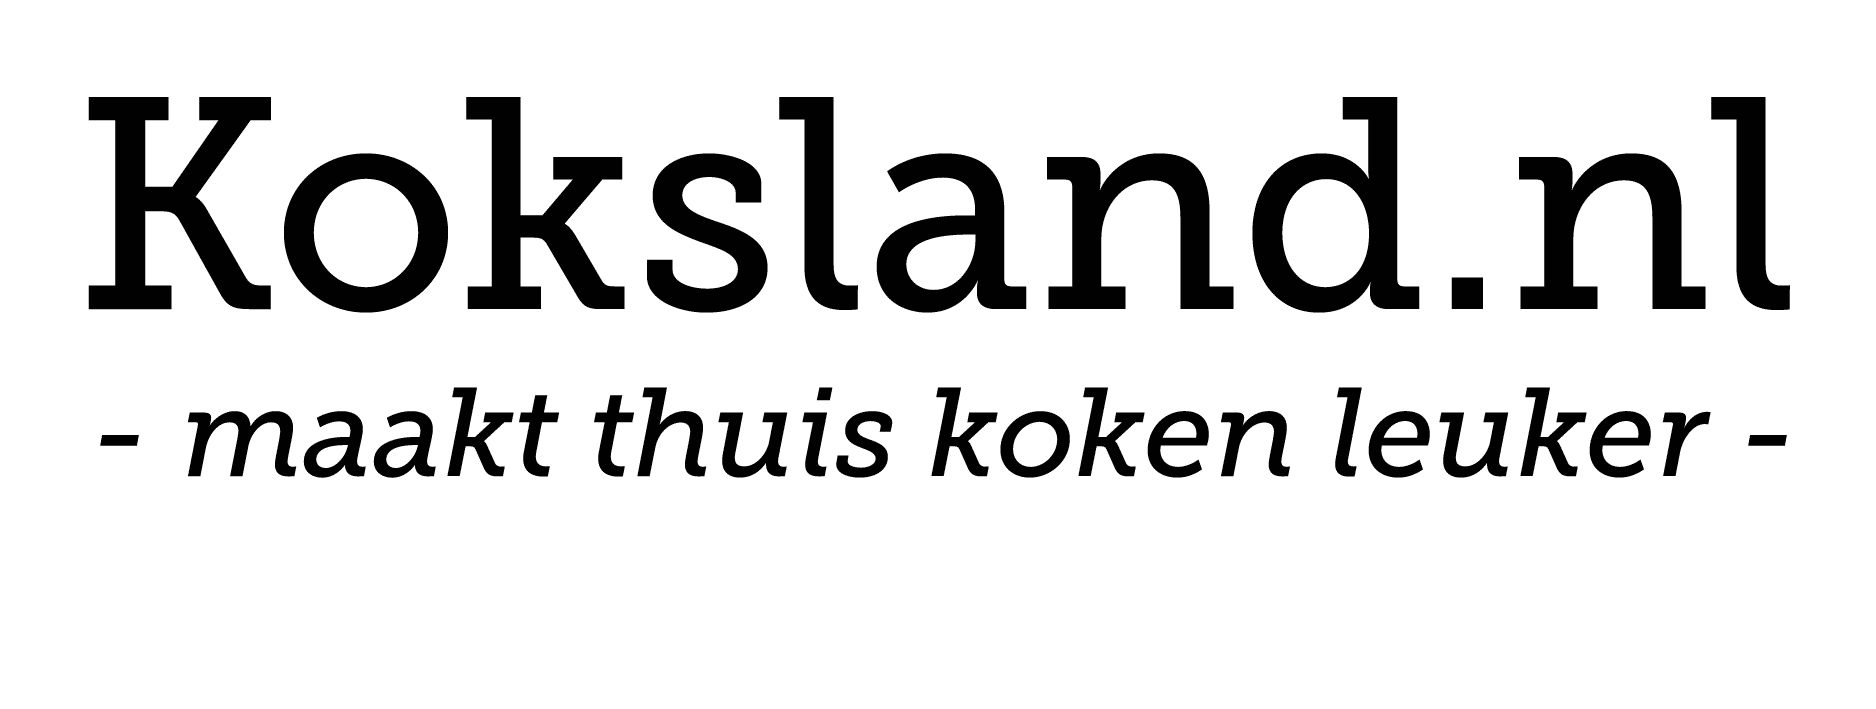 Koksland.nl